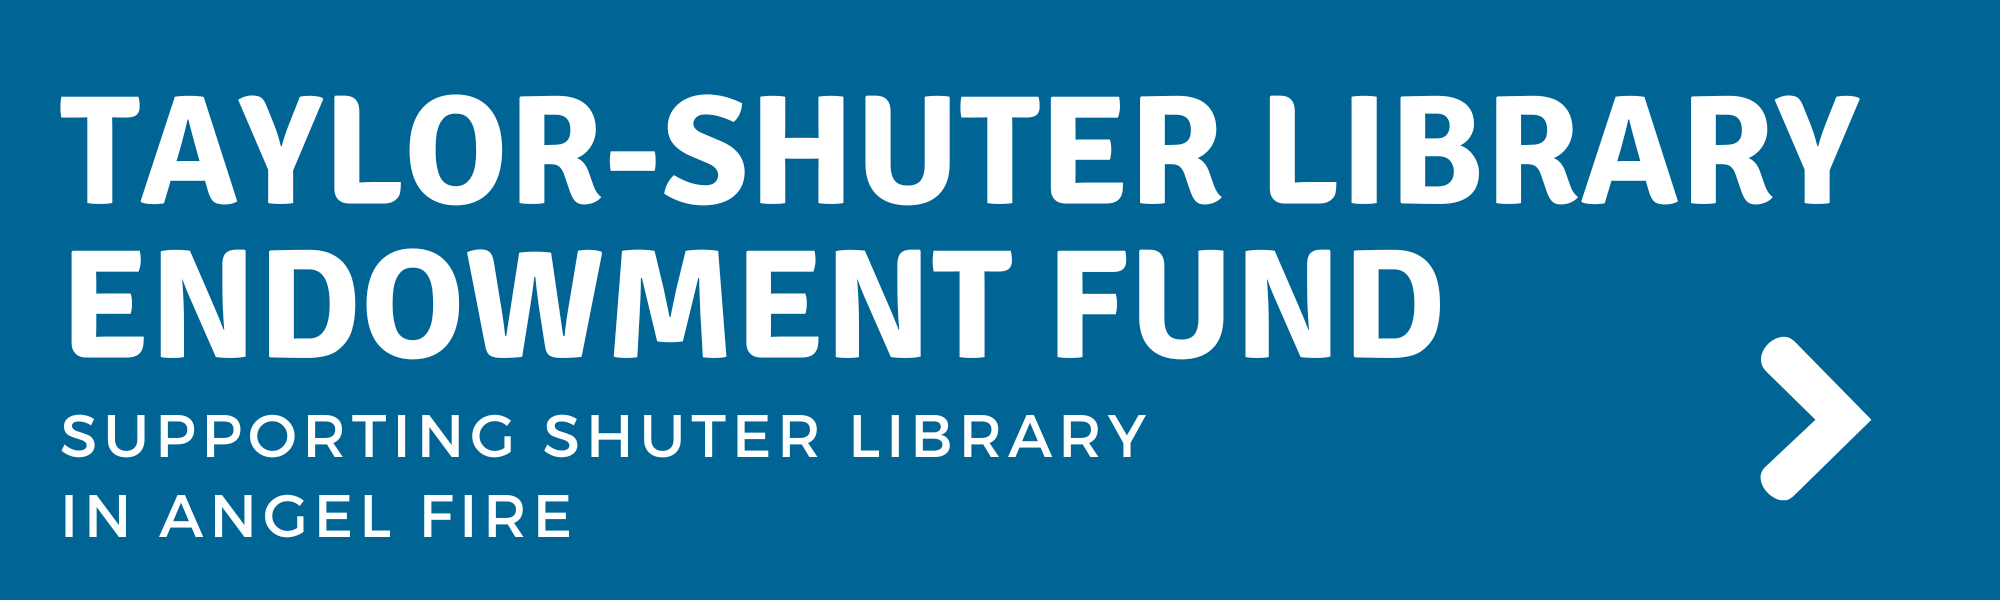 Shutter Library Fund